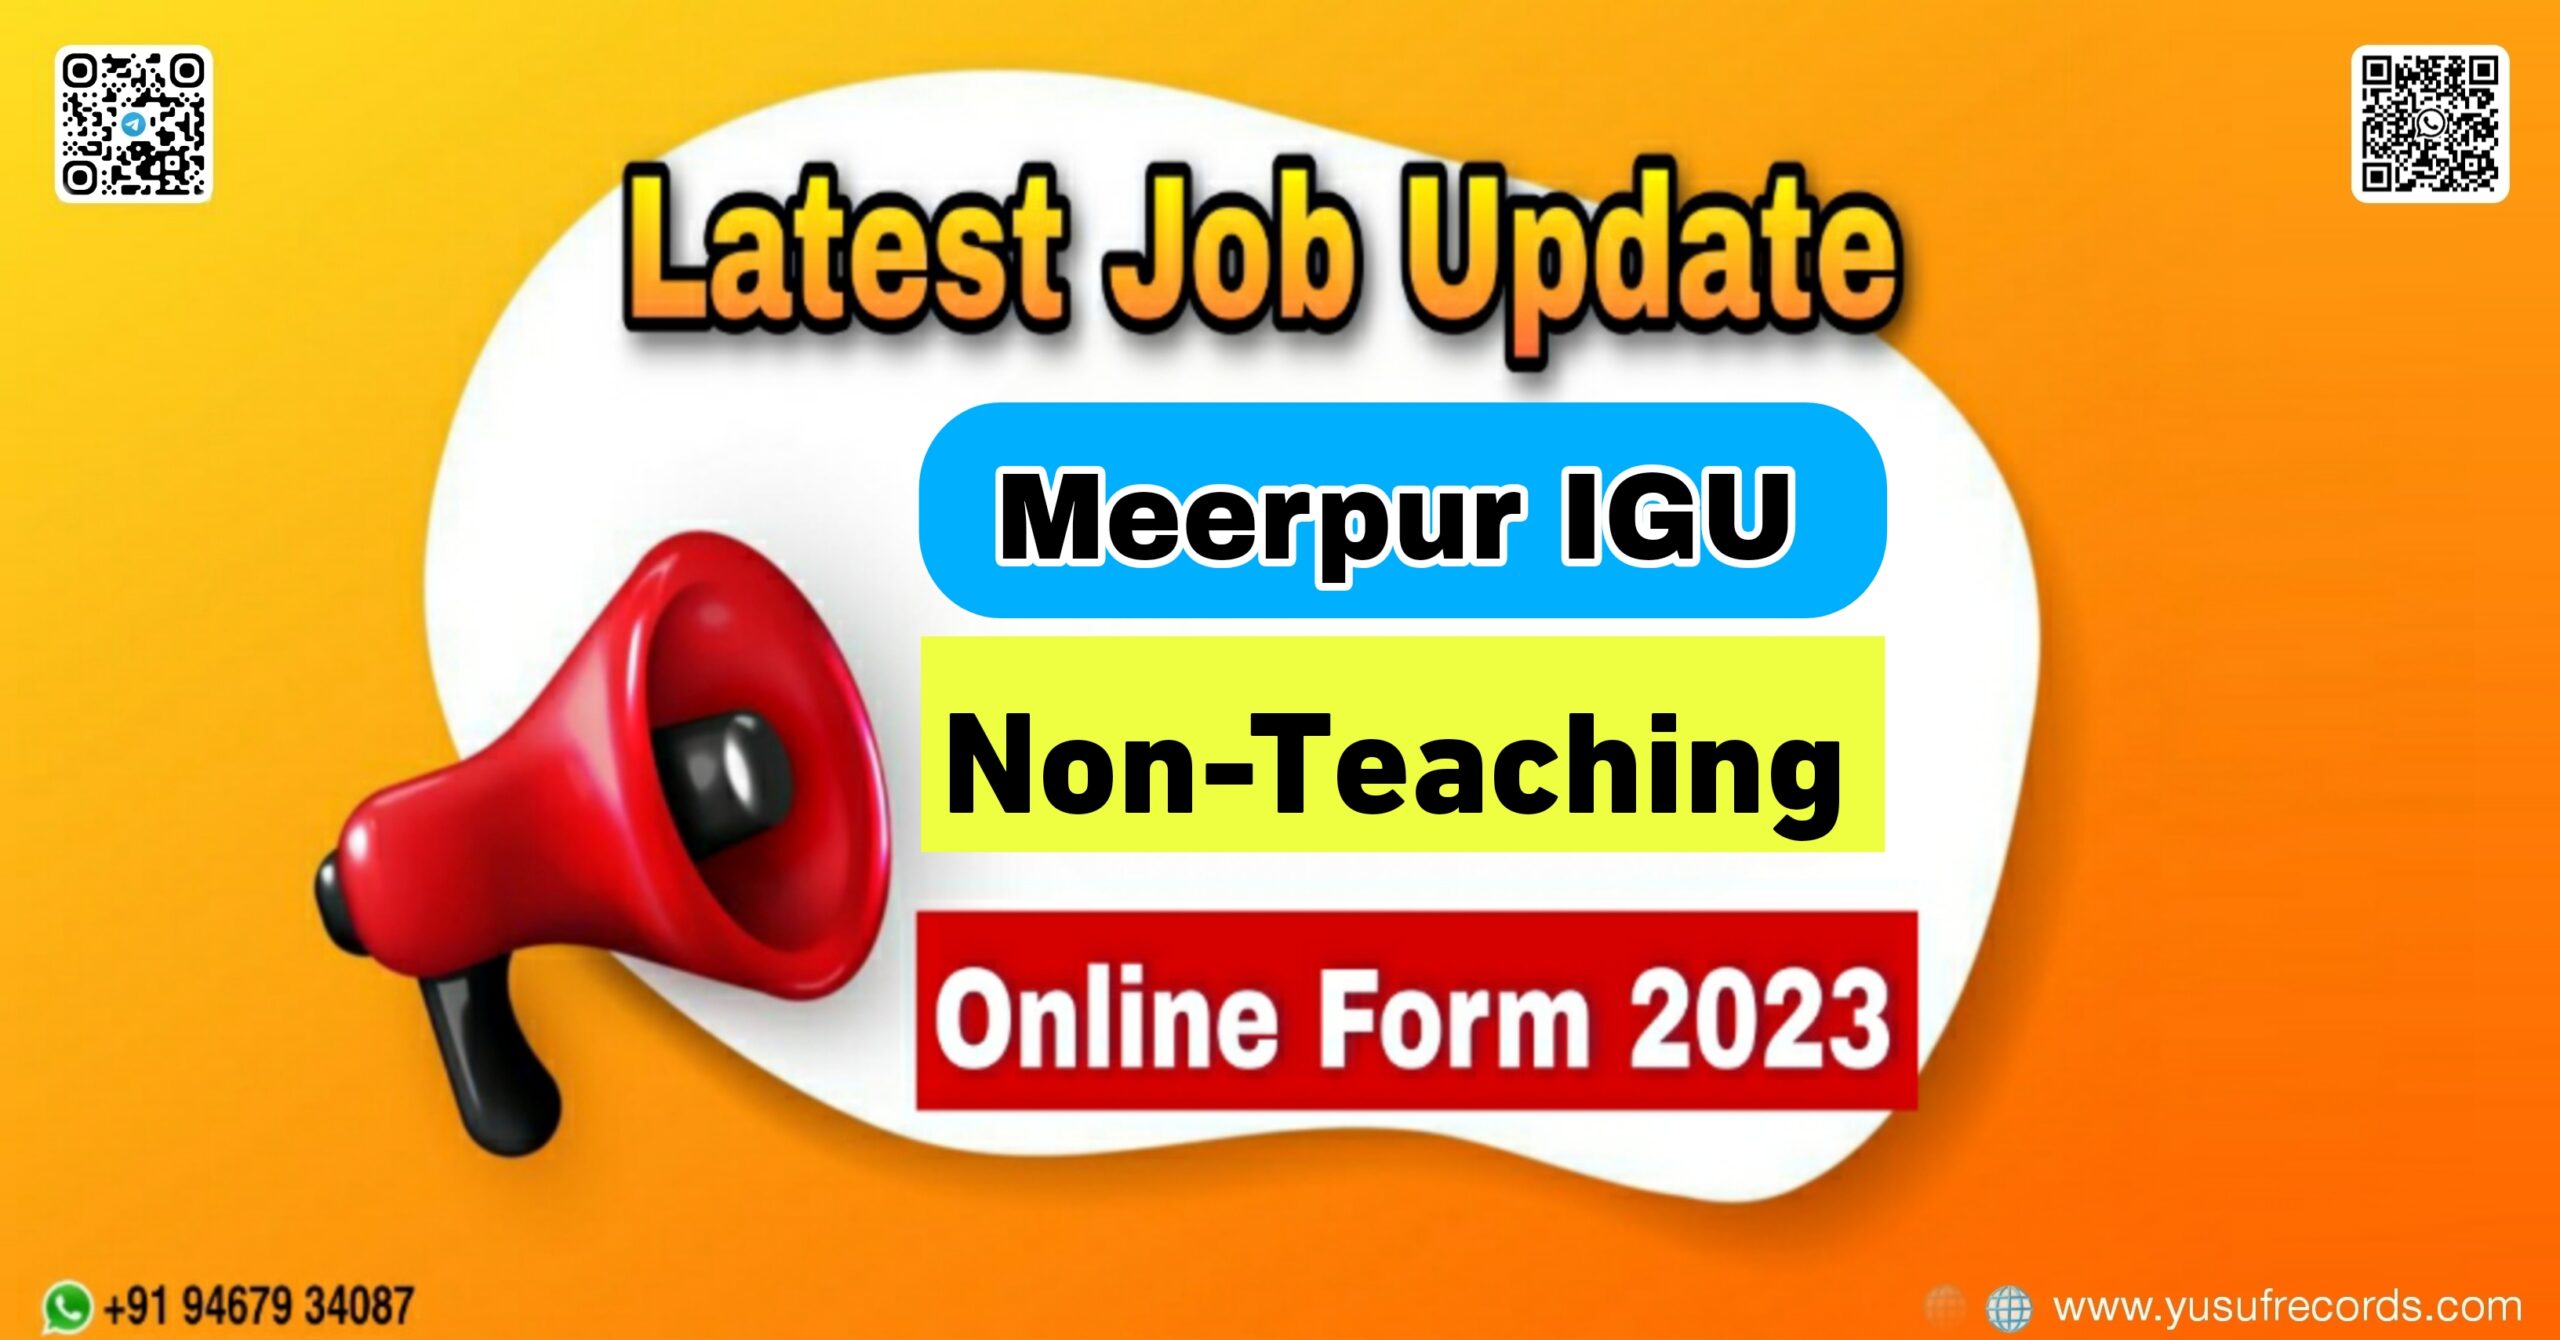 Meerpur IGU Non-Teaching Online Form yusufrecords